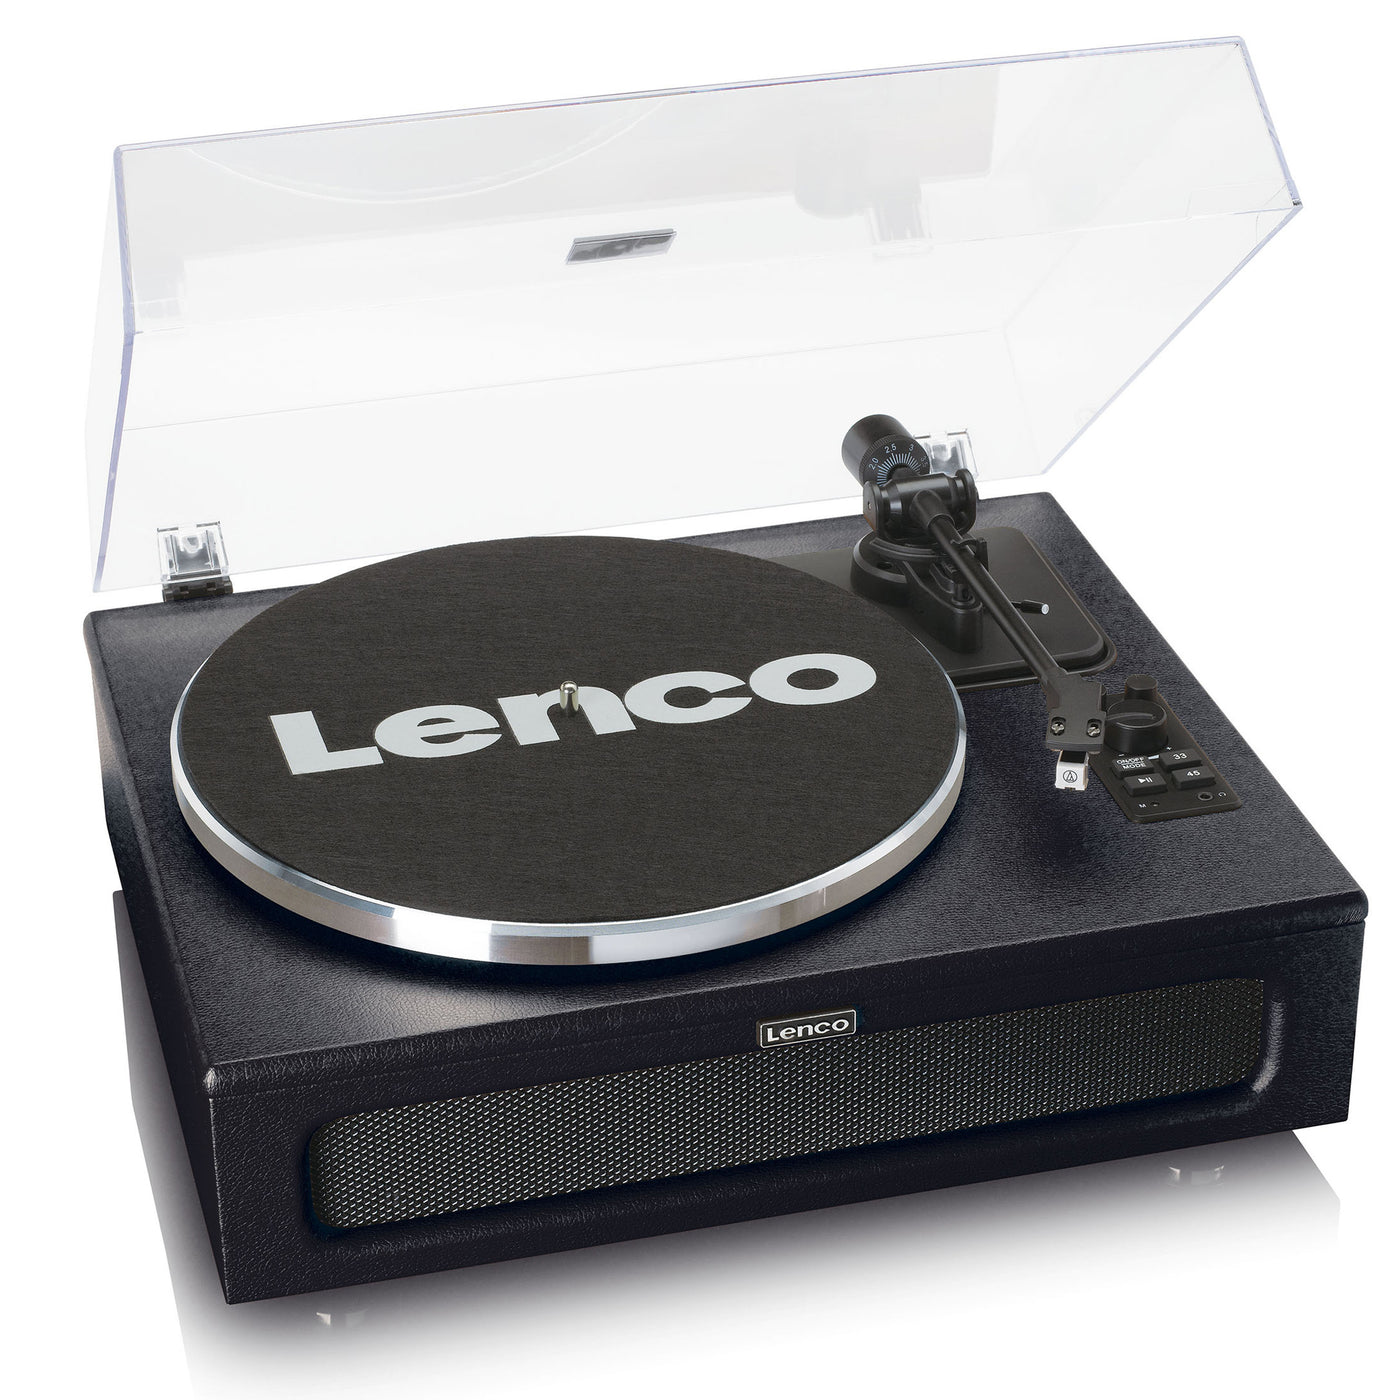 Offizieller Jetzt Webshop | – offiziellen Webshop Lenco.de im Lenco - Lenco LS-430BK kaufen?